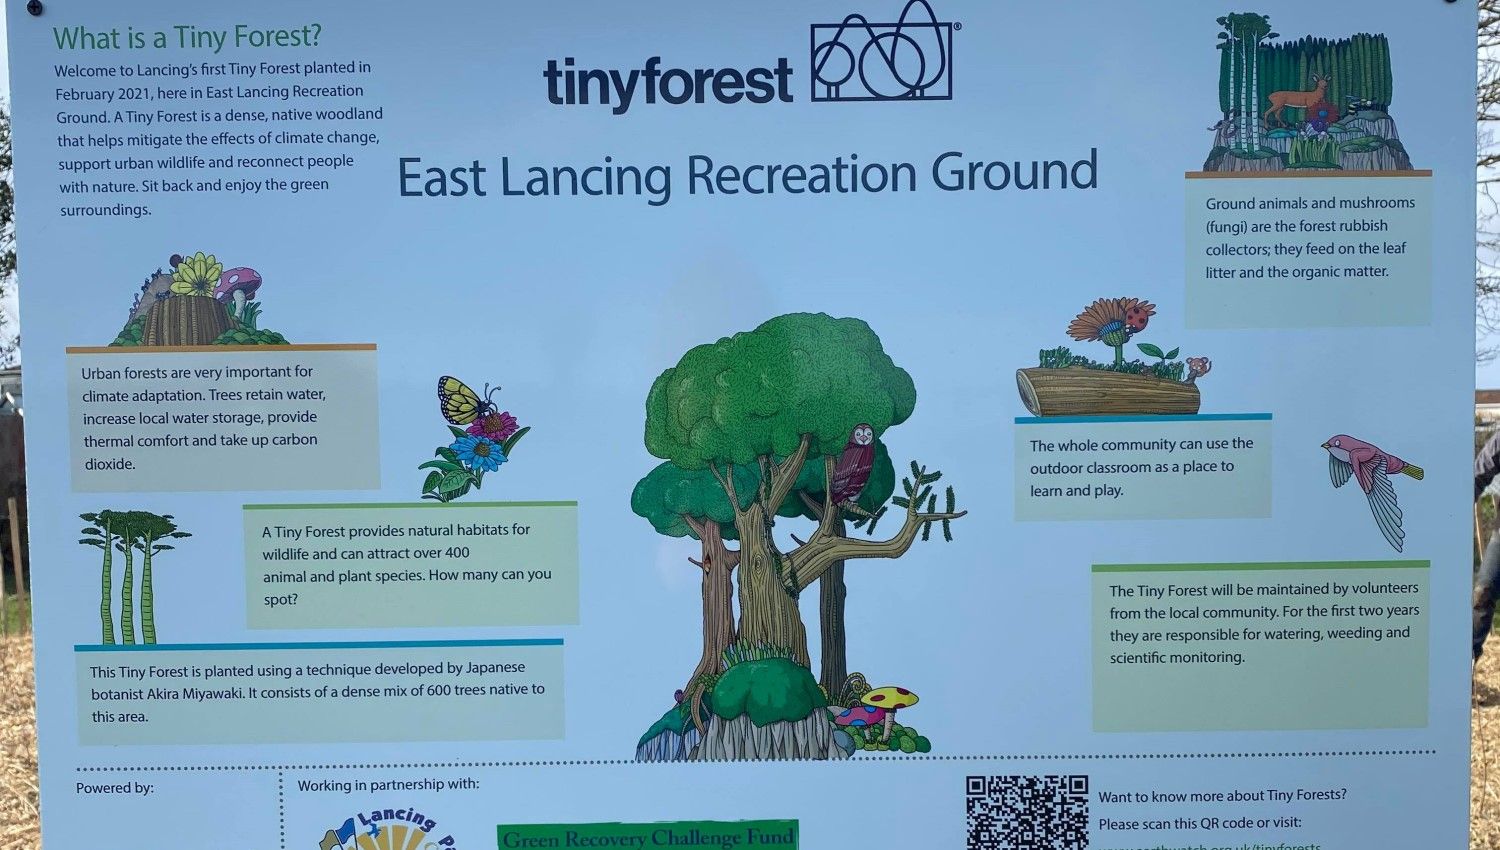 March 2021: Tiny Forest plaque (Photo credit Lancing Parish Council)